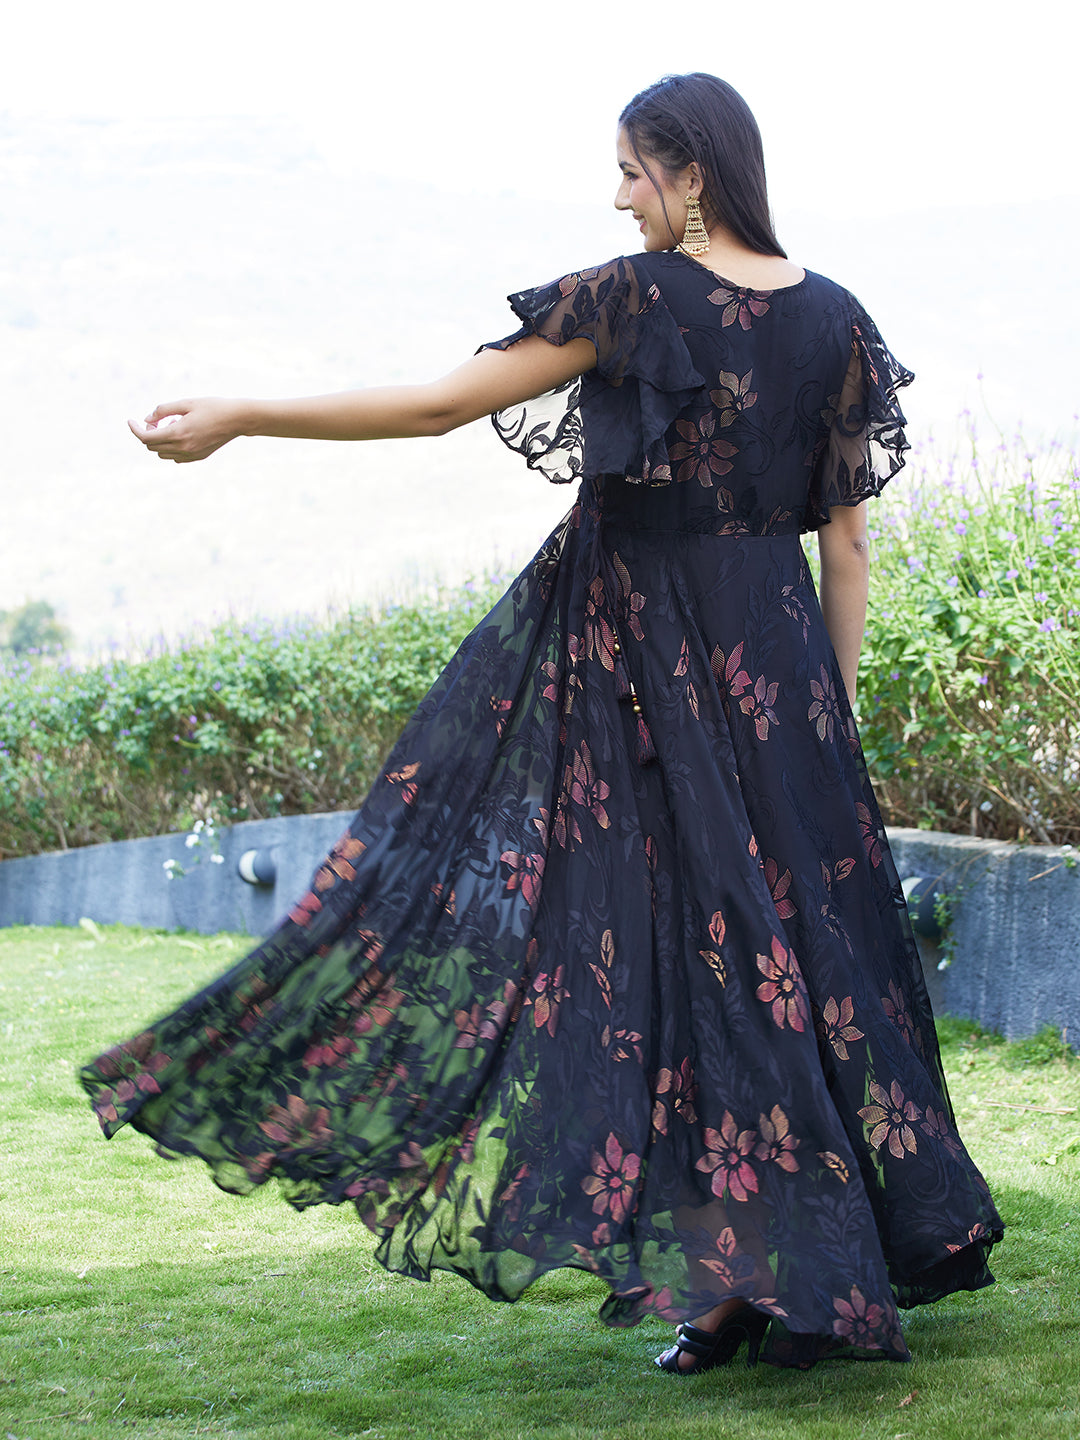 Farm Rio Fruit Garden Maxi Dress S Long Blouson Sleeve Floral Black Rainbow  New | eBay